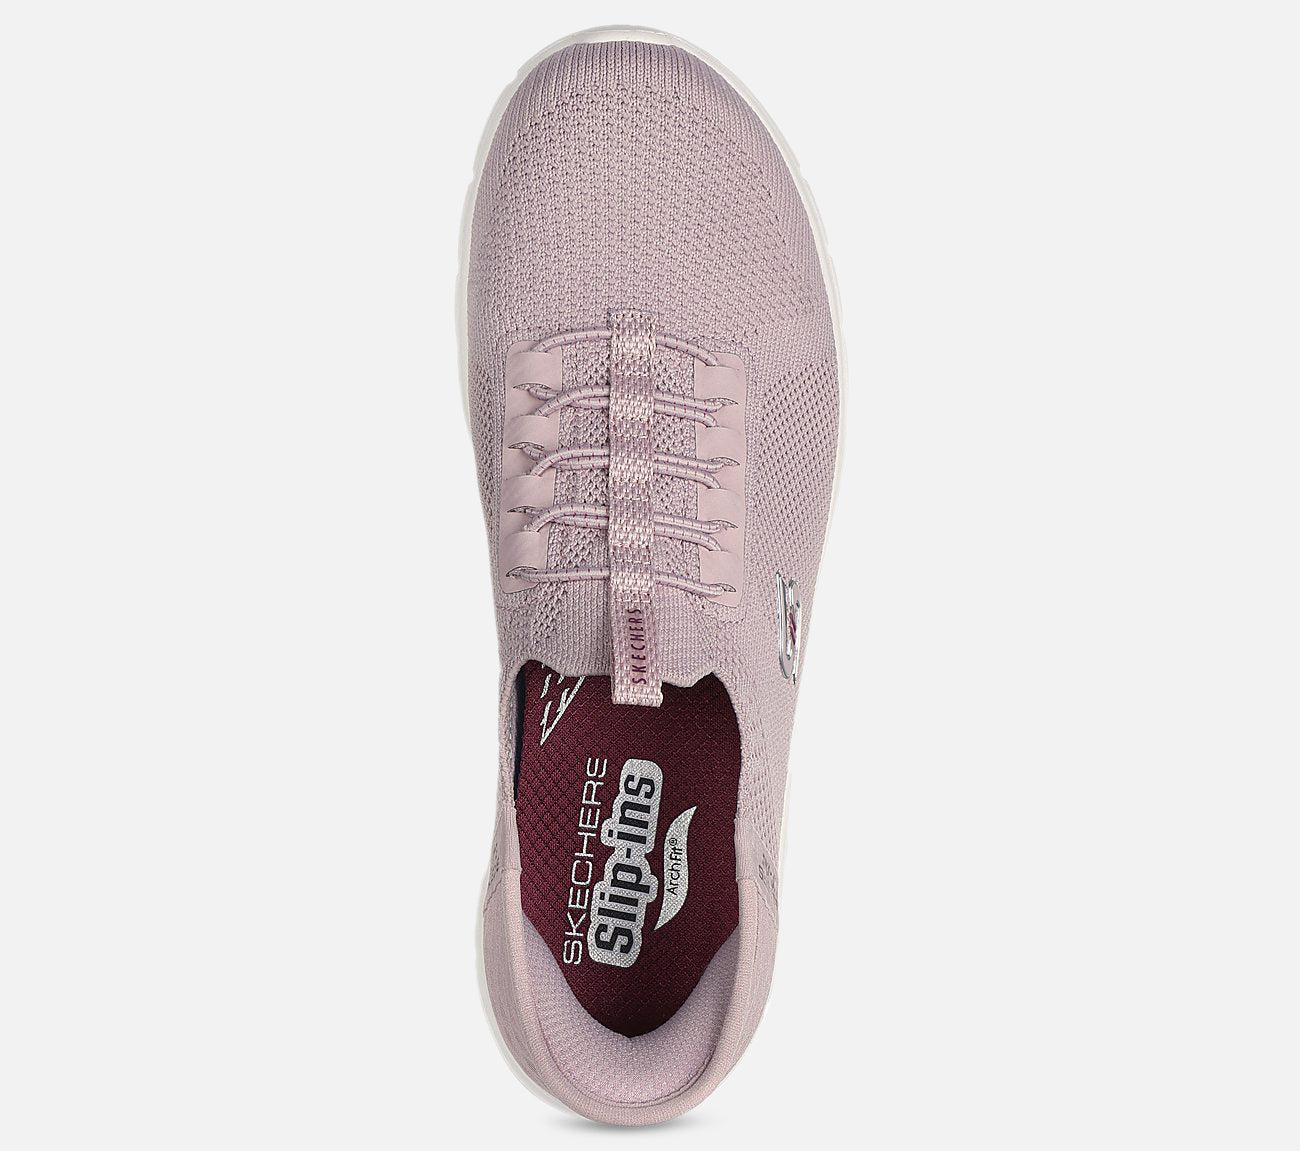 Slip-ins: Arch Fit Vista - Aspiration Shoe Skechers